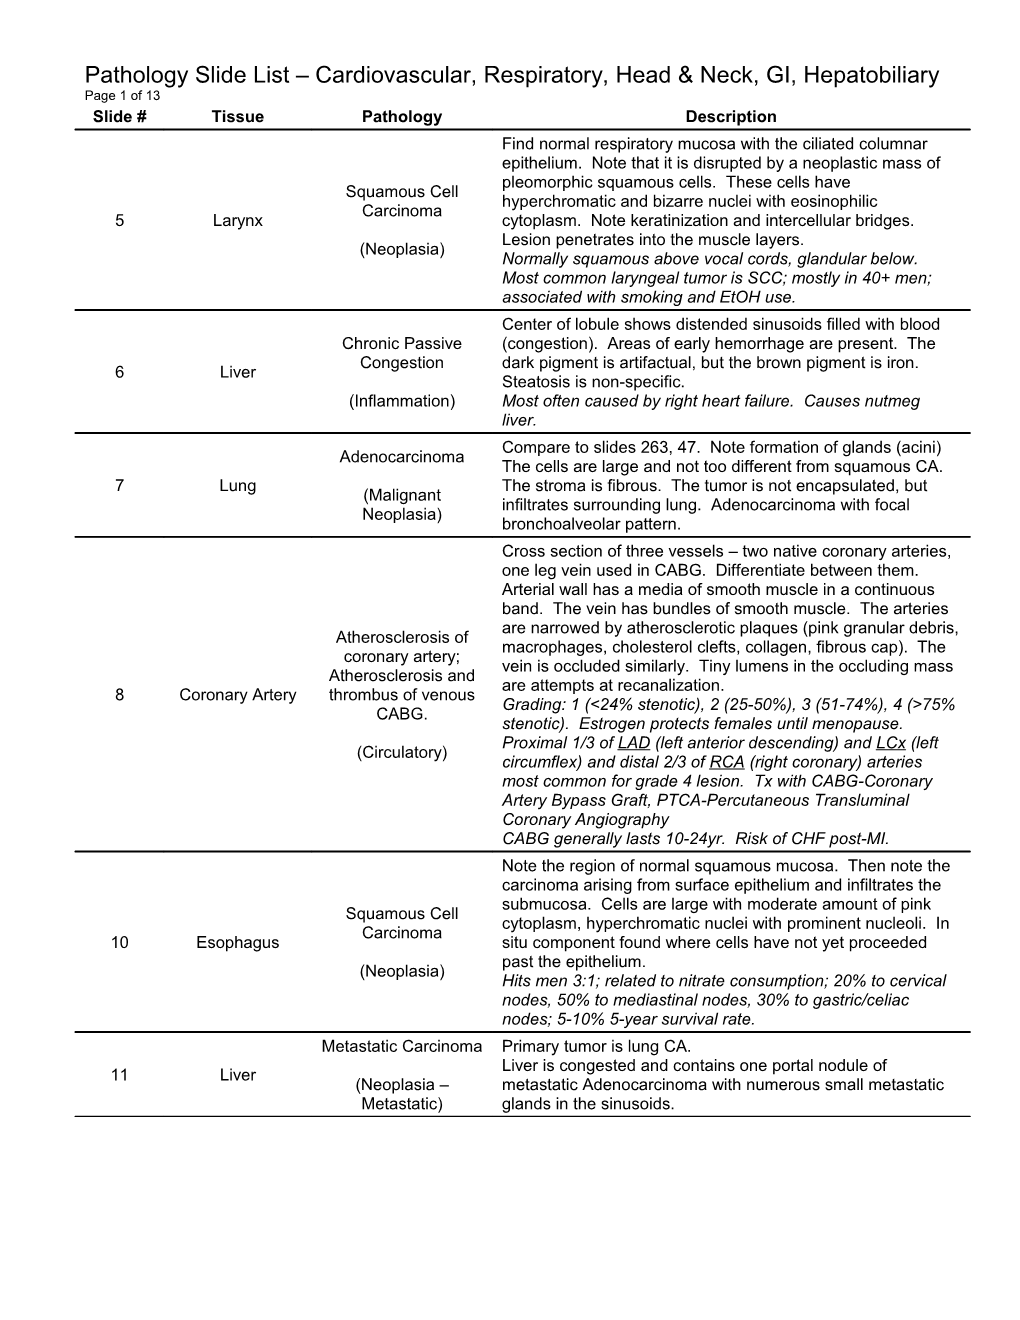 Pathology Slide List Cardiovascular, Respiratory, Head & Neck, GI, Hepatobiliary